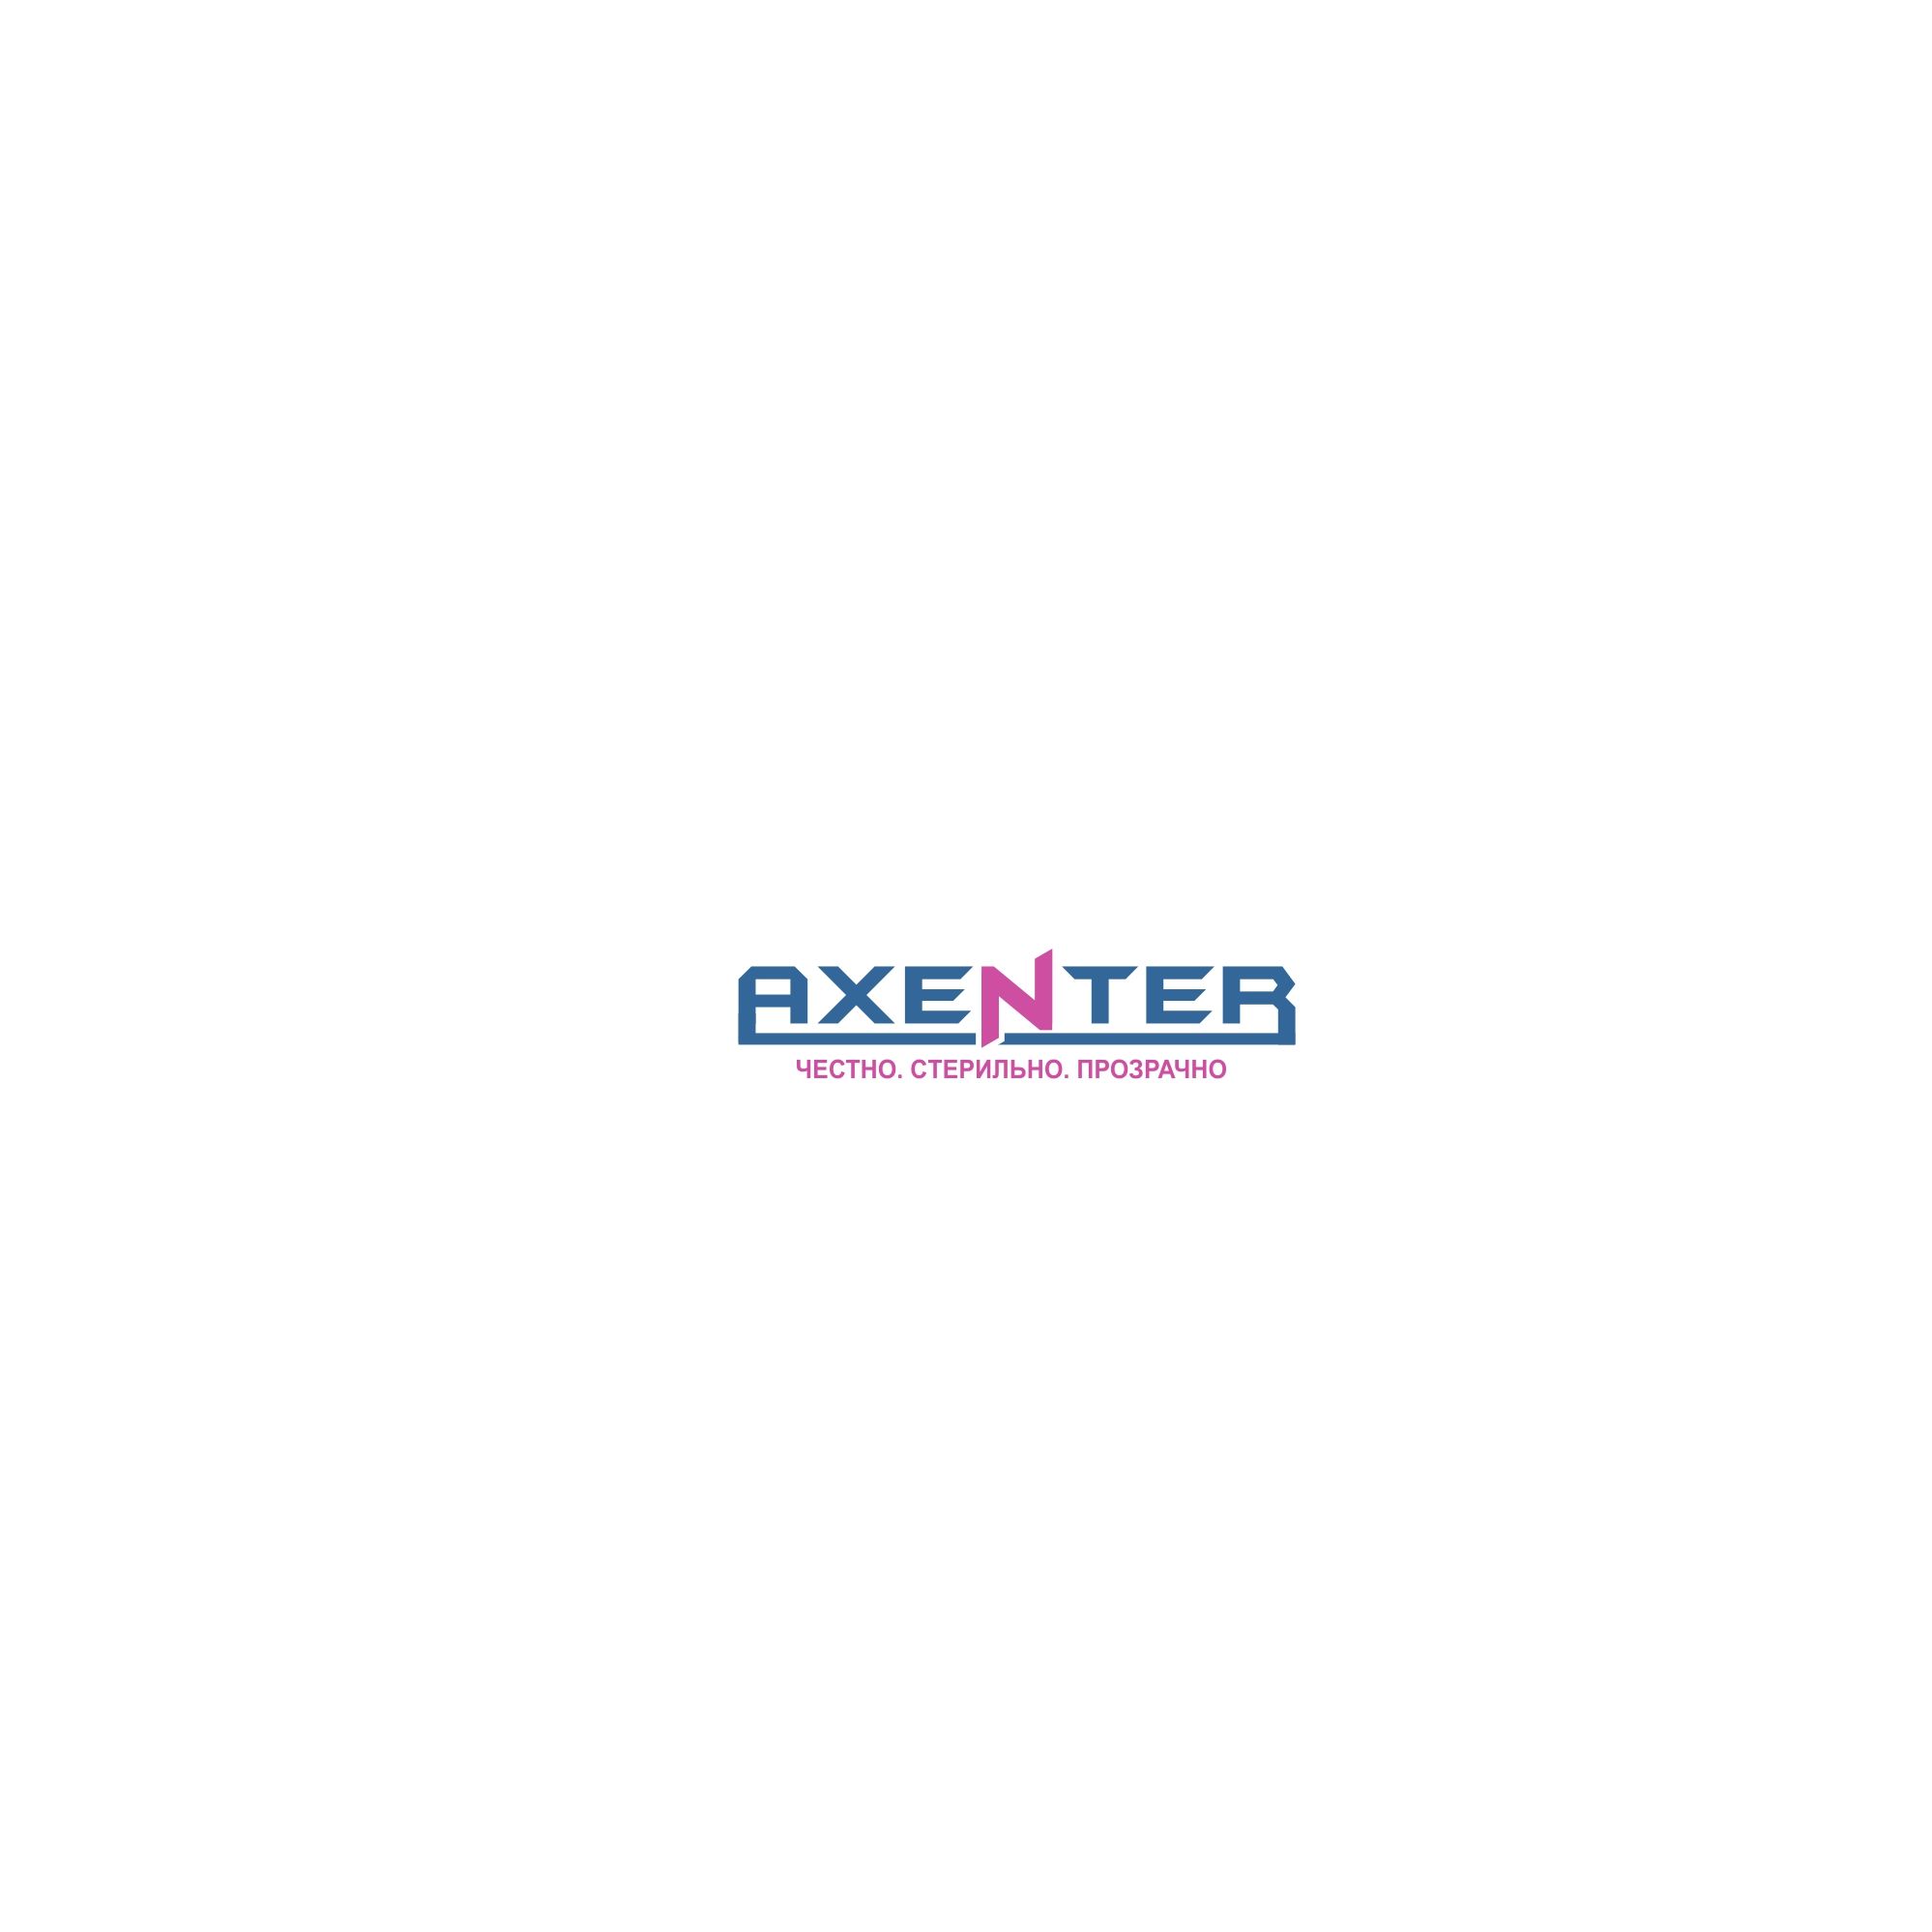 Логотип для Акцентр / Axenter - дизайнер trojni